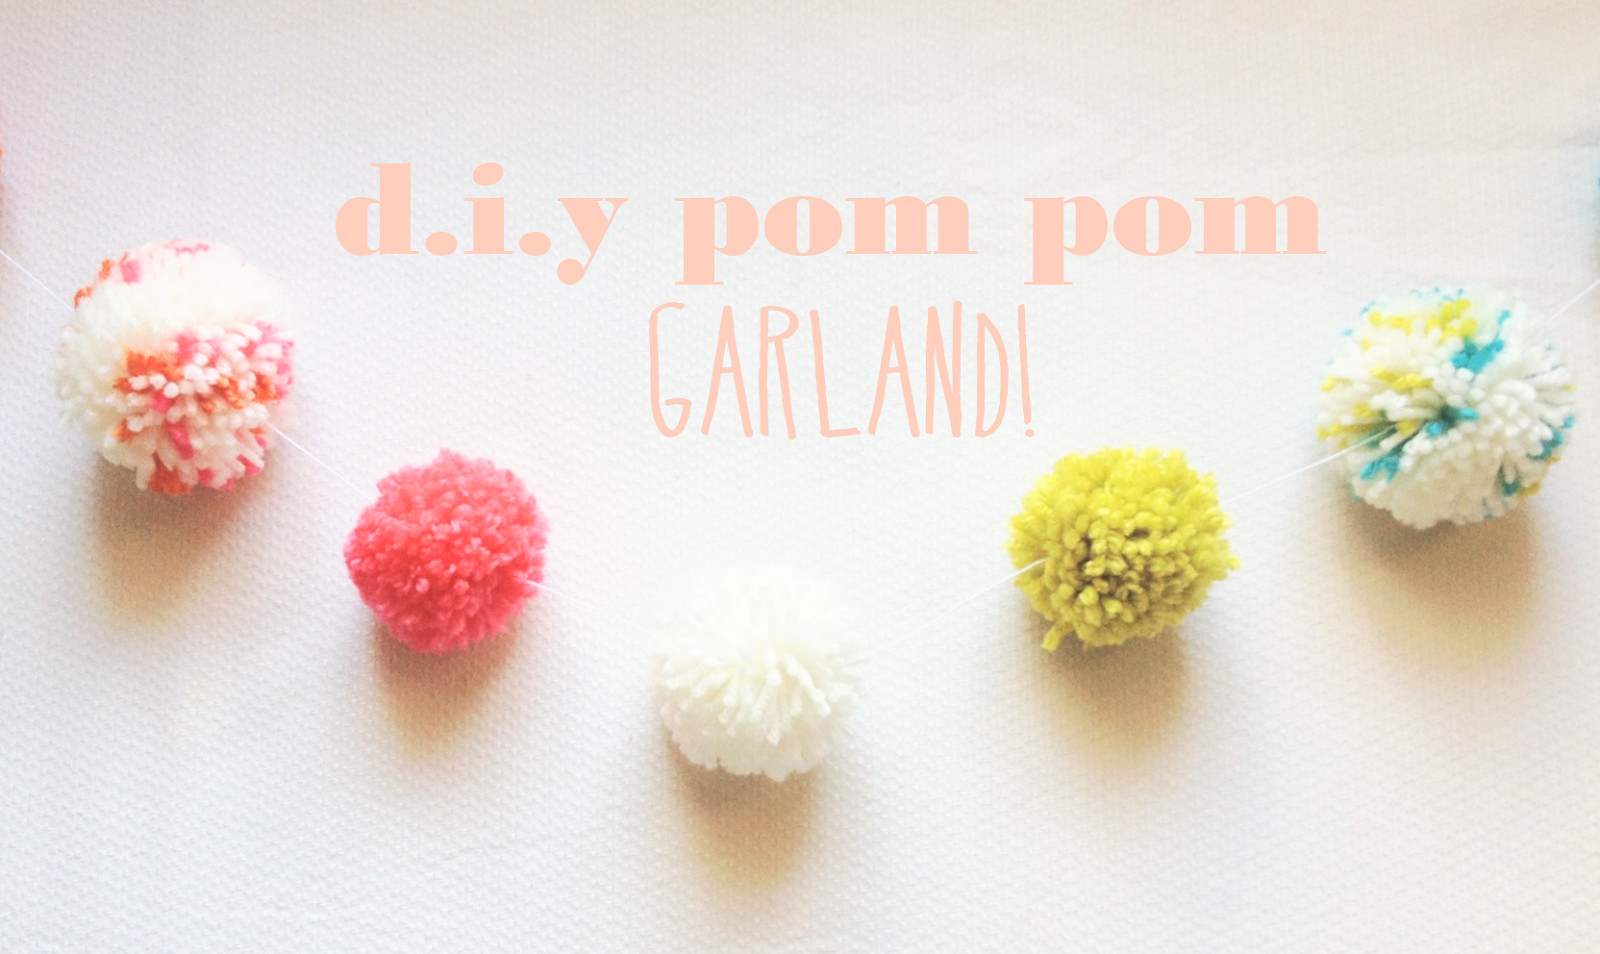 Best ideas about DIY Pom Pom Garland
. Save or Pin M O T H E R OF B E E E S Pom Pom Garland Now.